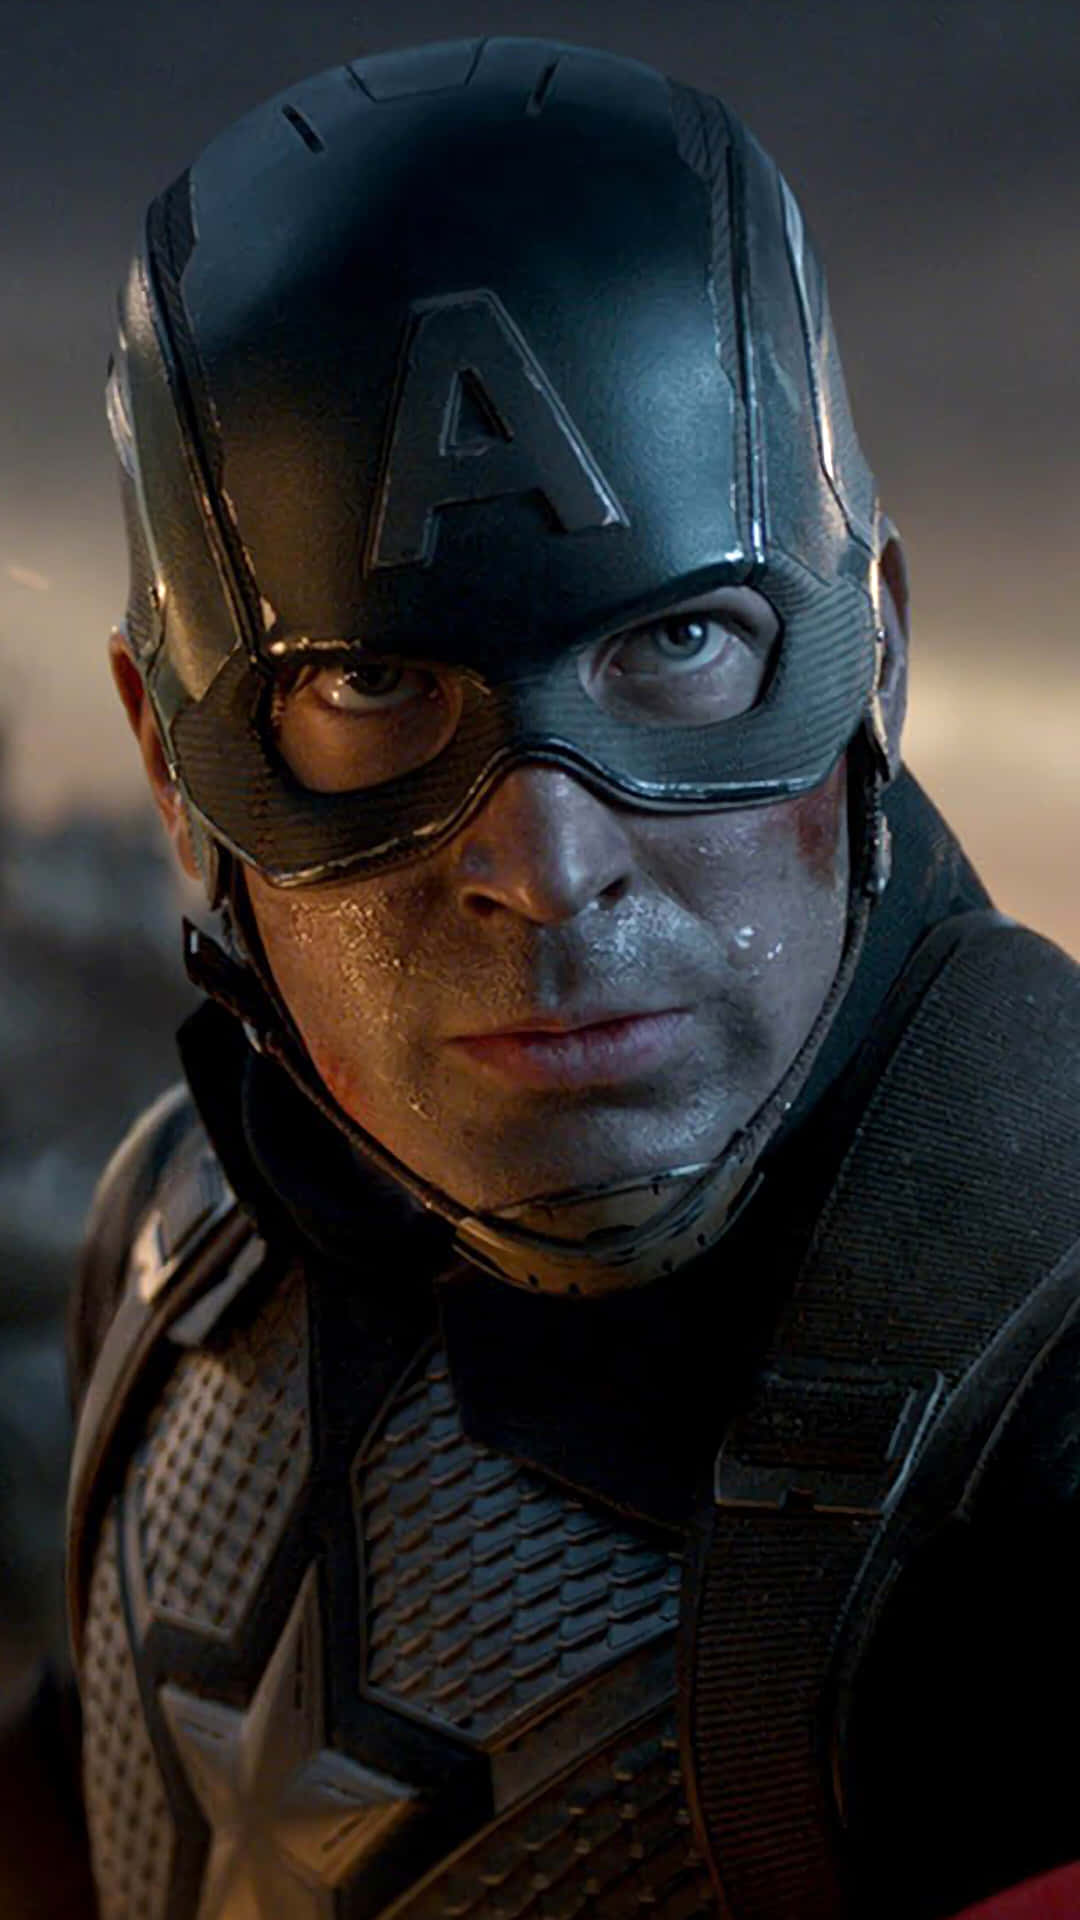 The true hero, Captain America, in action in the thrilling Marvel blockbuster Endgame. Wallpaper